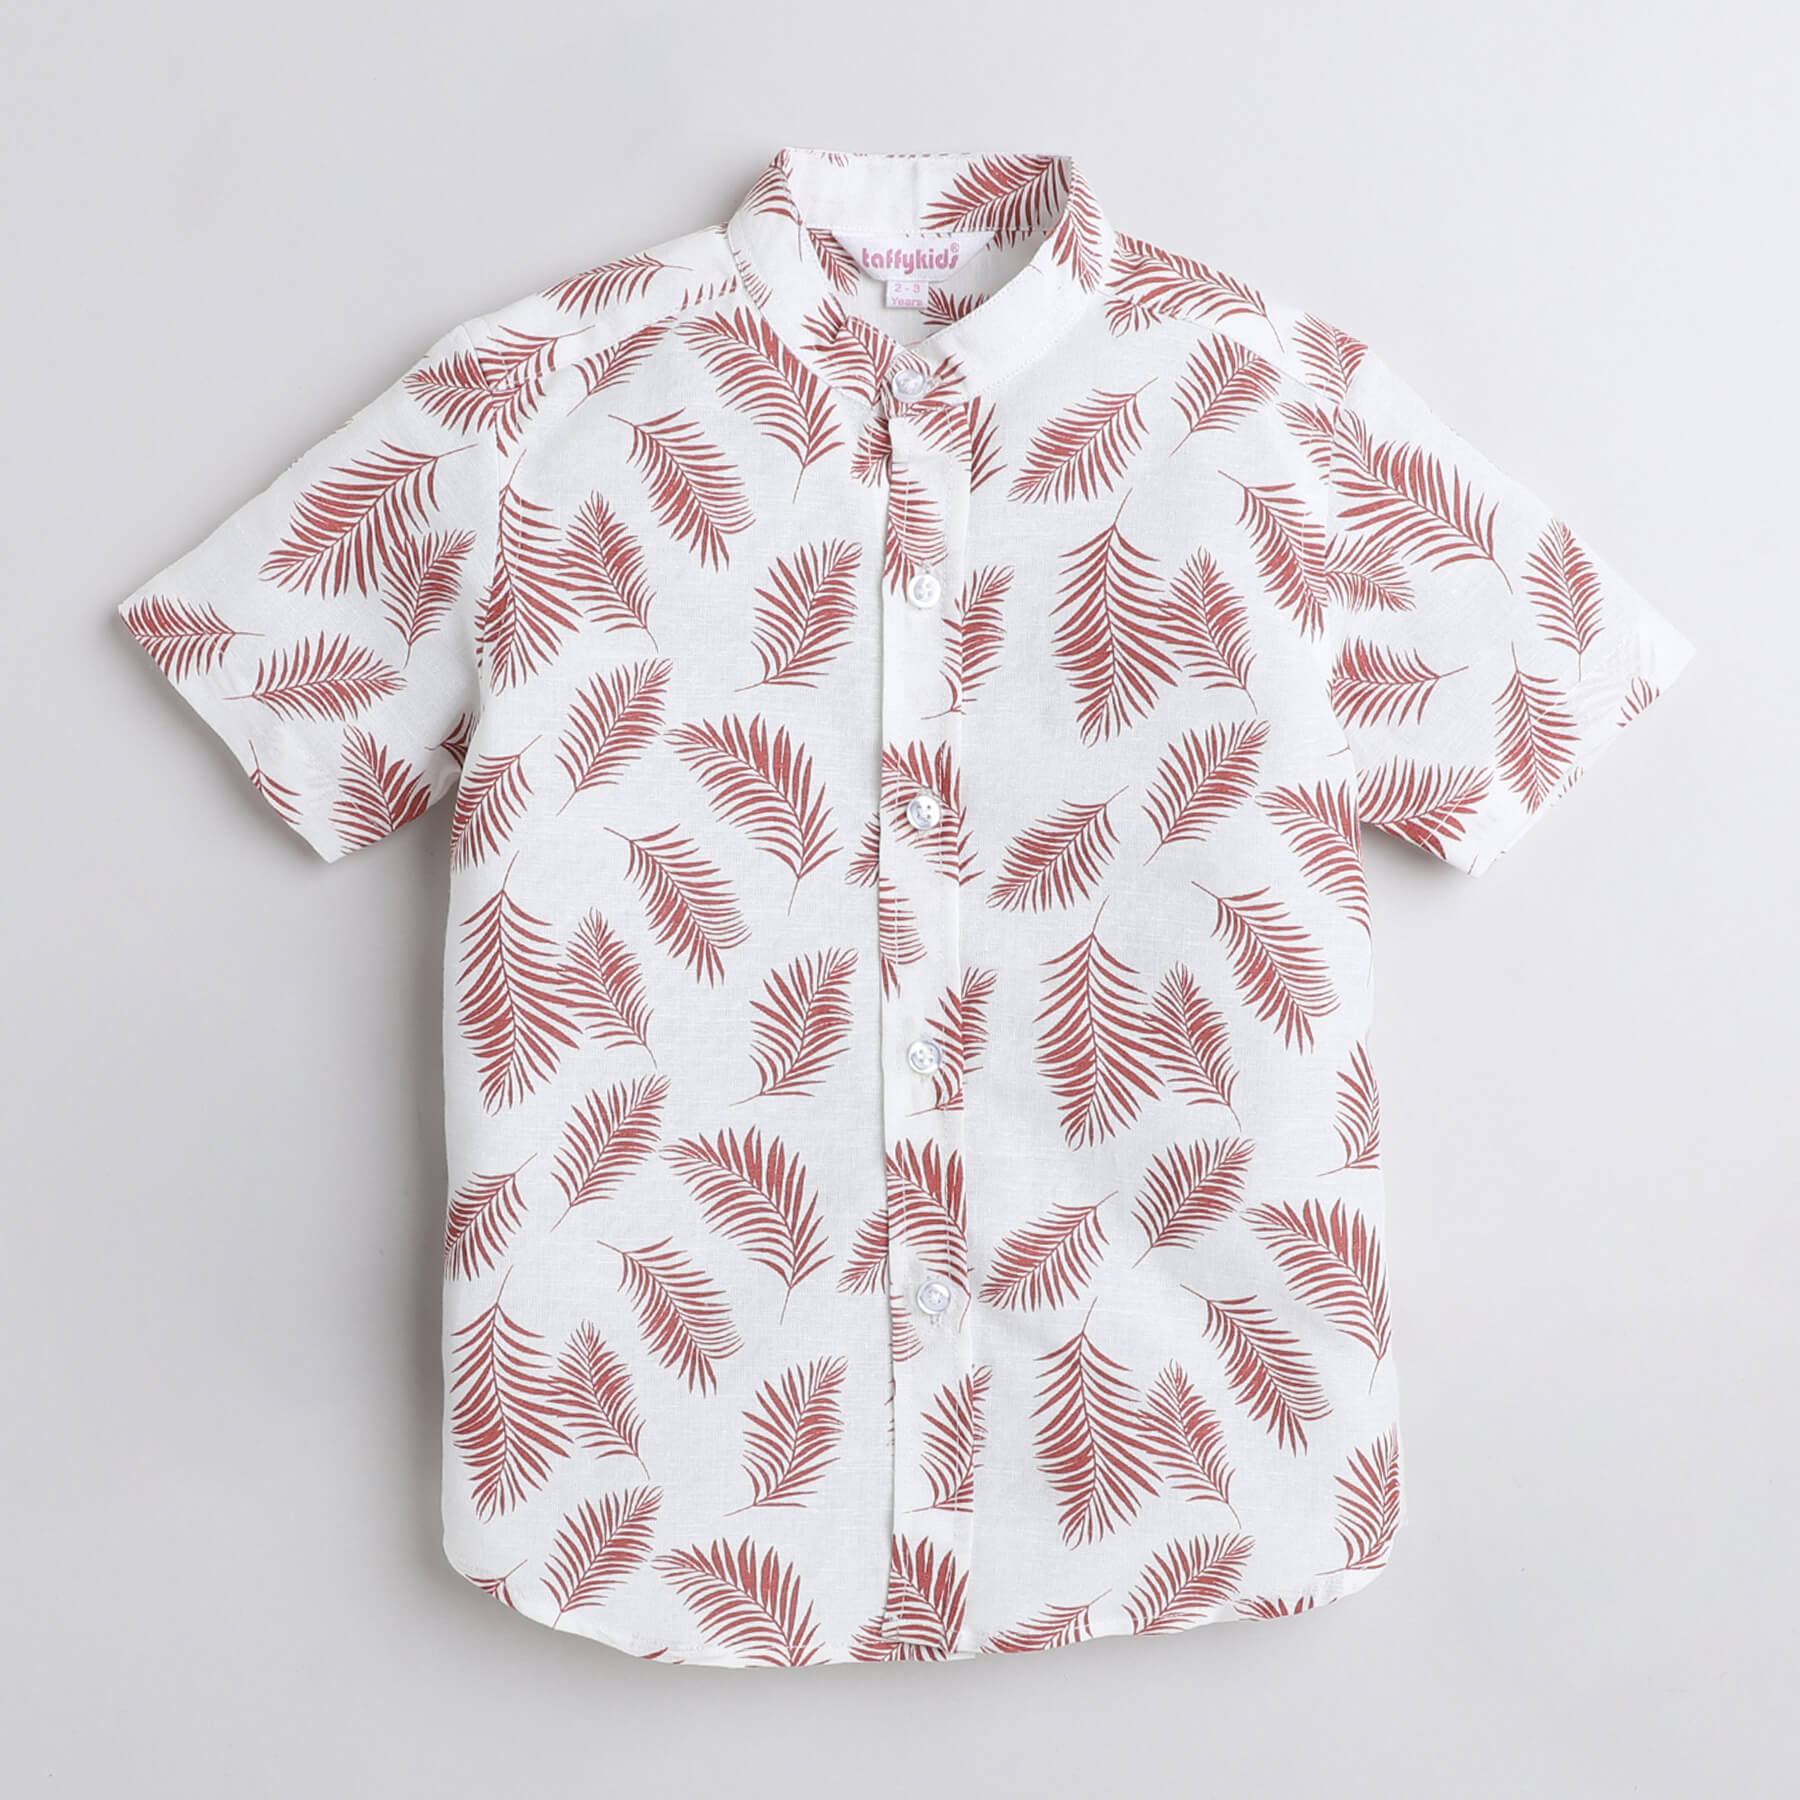 Taffykids cotton linen Leaf printed mandarin collar Half sleeves Shirt-Off white/Brown